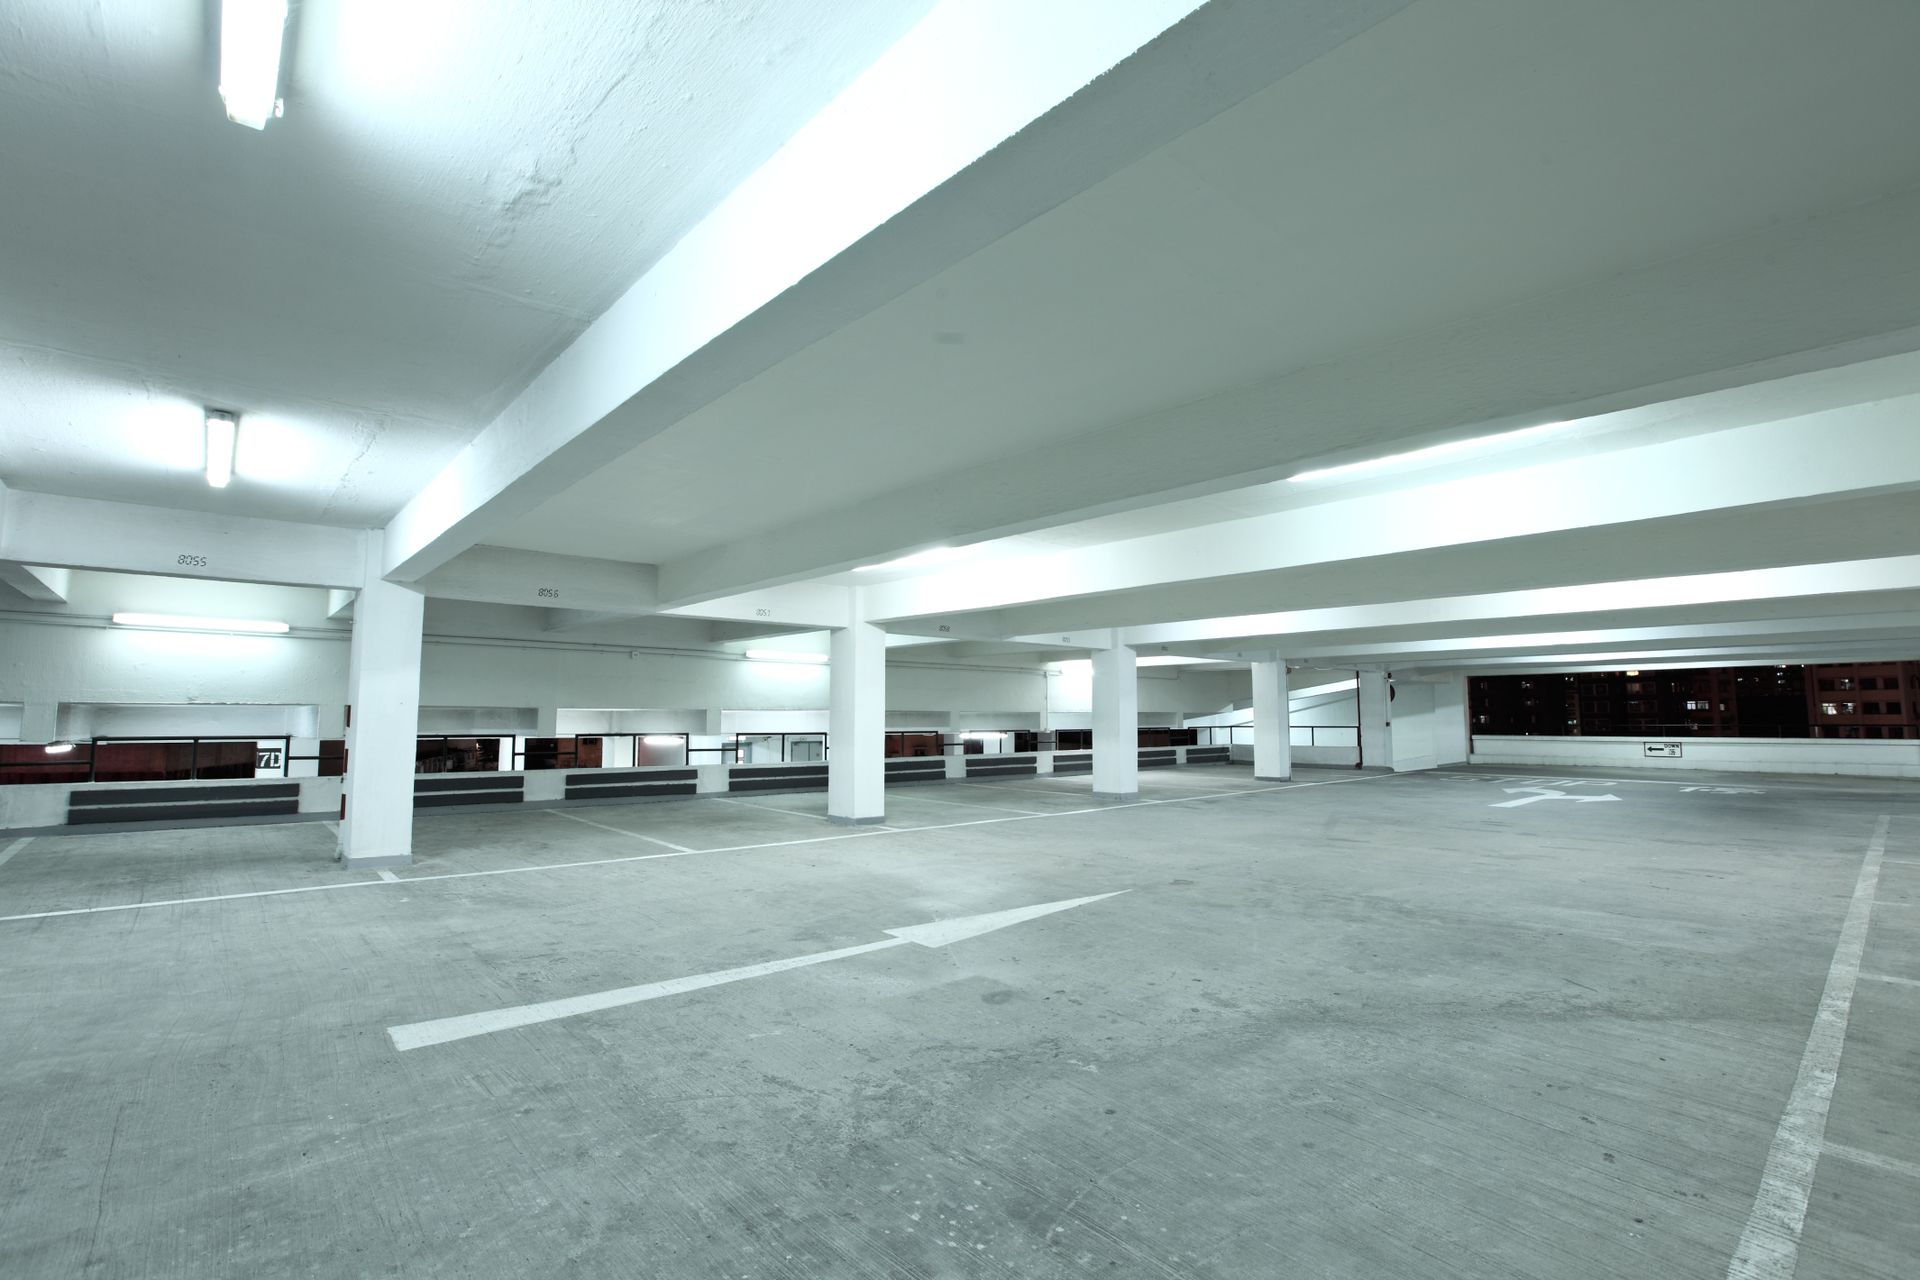 A large commercial parking lot under a building